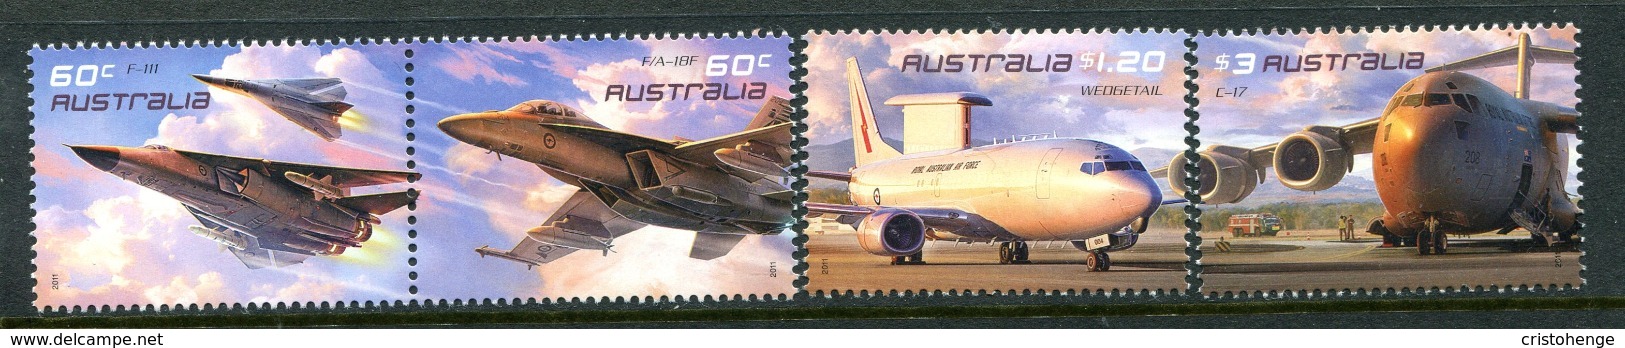 Australia 2011 Royal Australian Air Force Set MNH (SG 3552-3555) - Mint Stamps